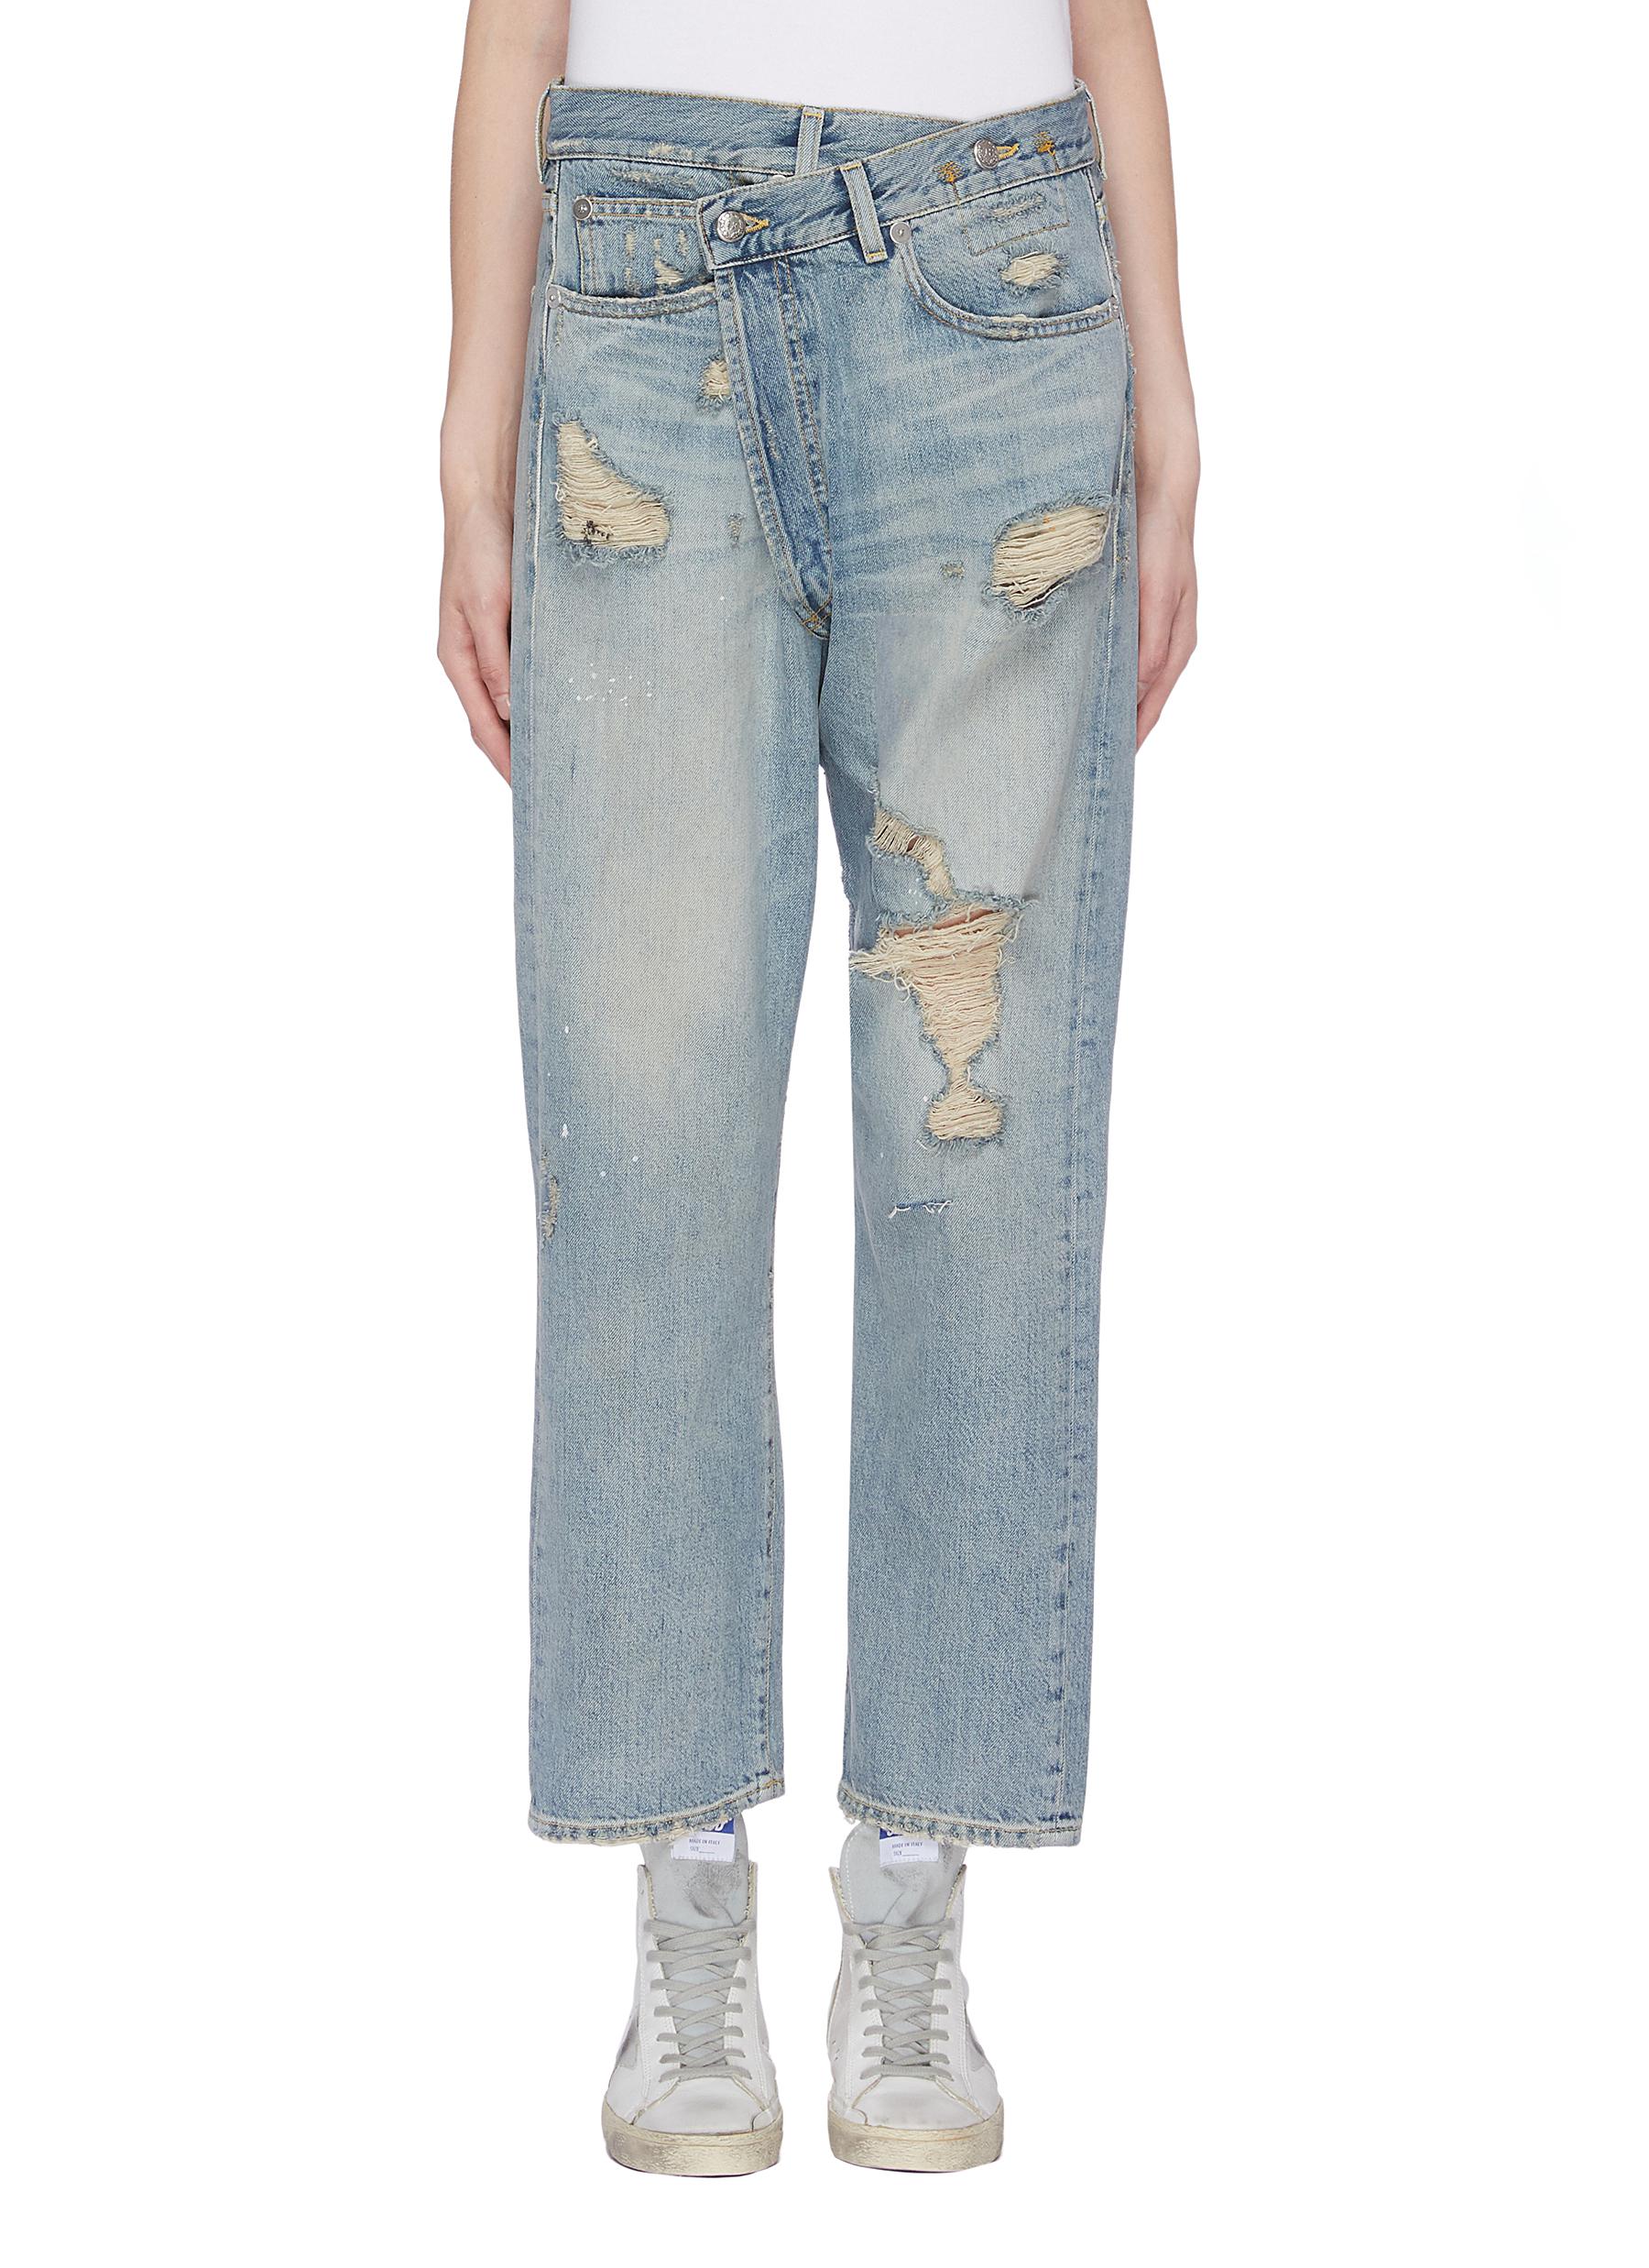 Crossover asymmetric waist jeans by R13